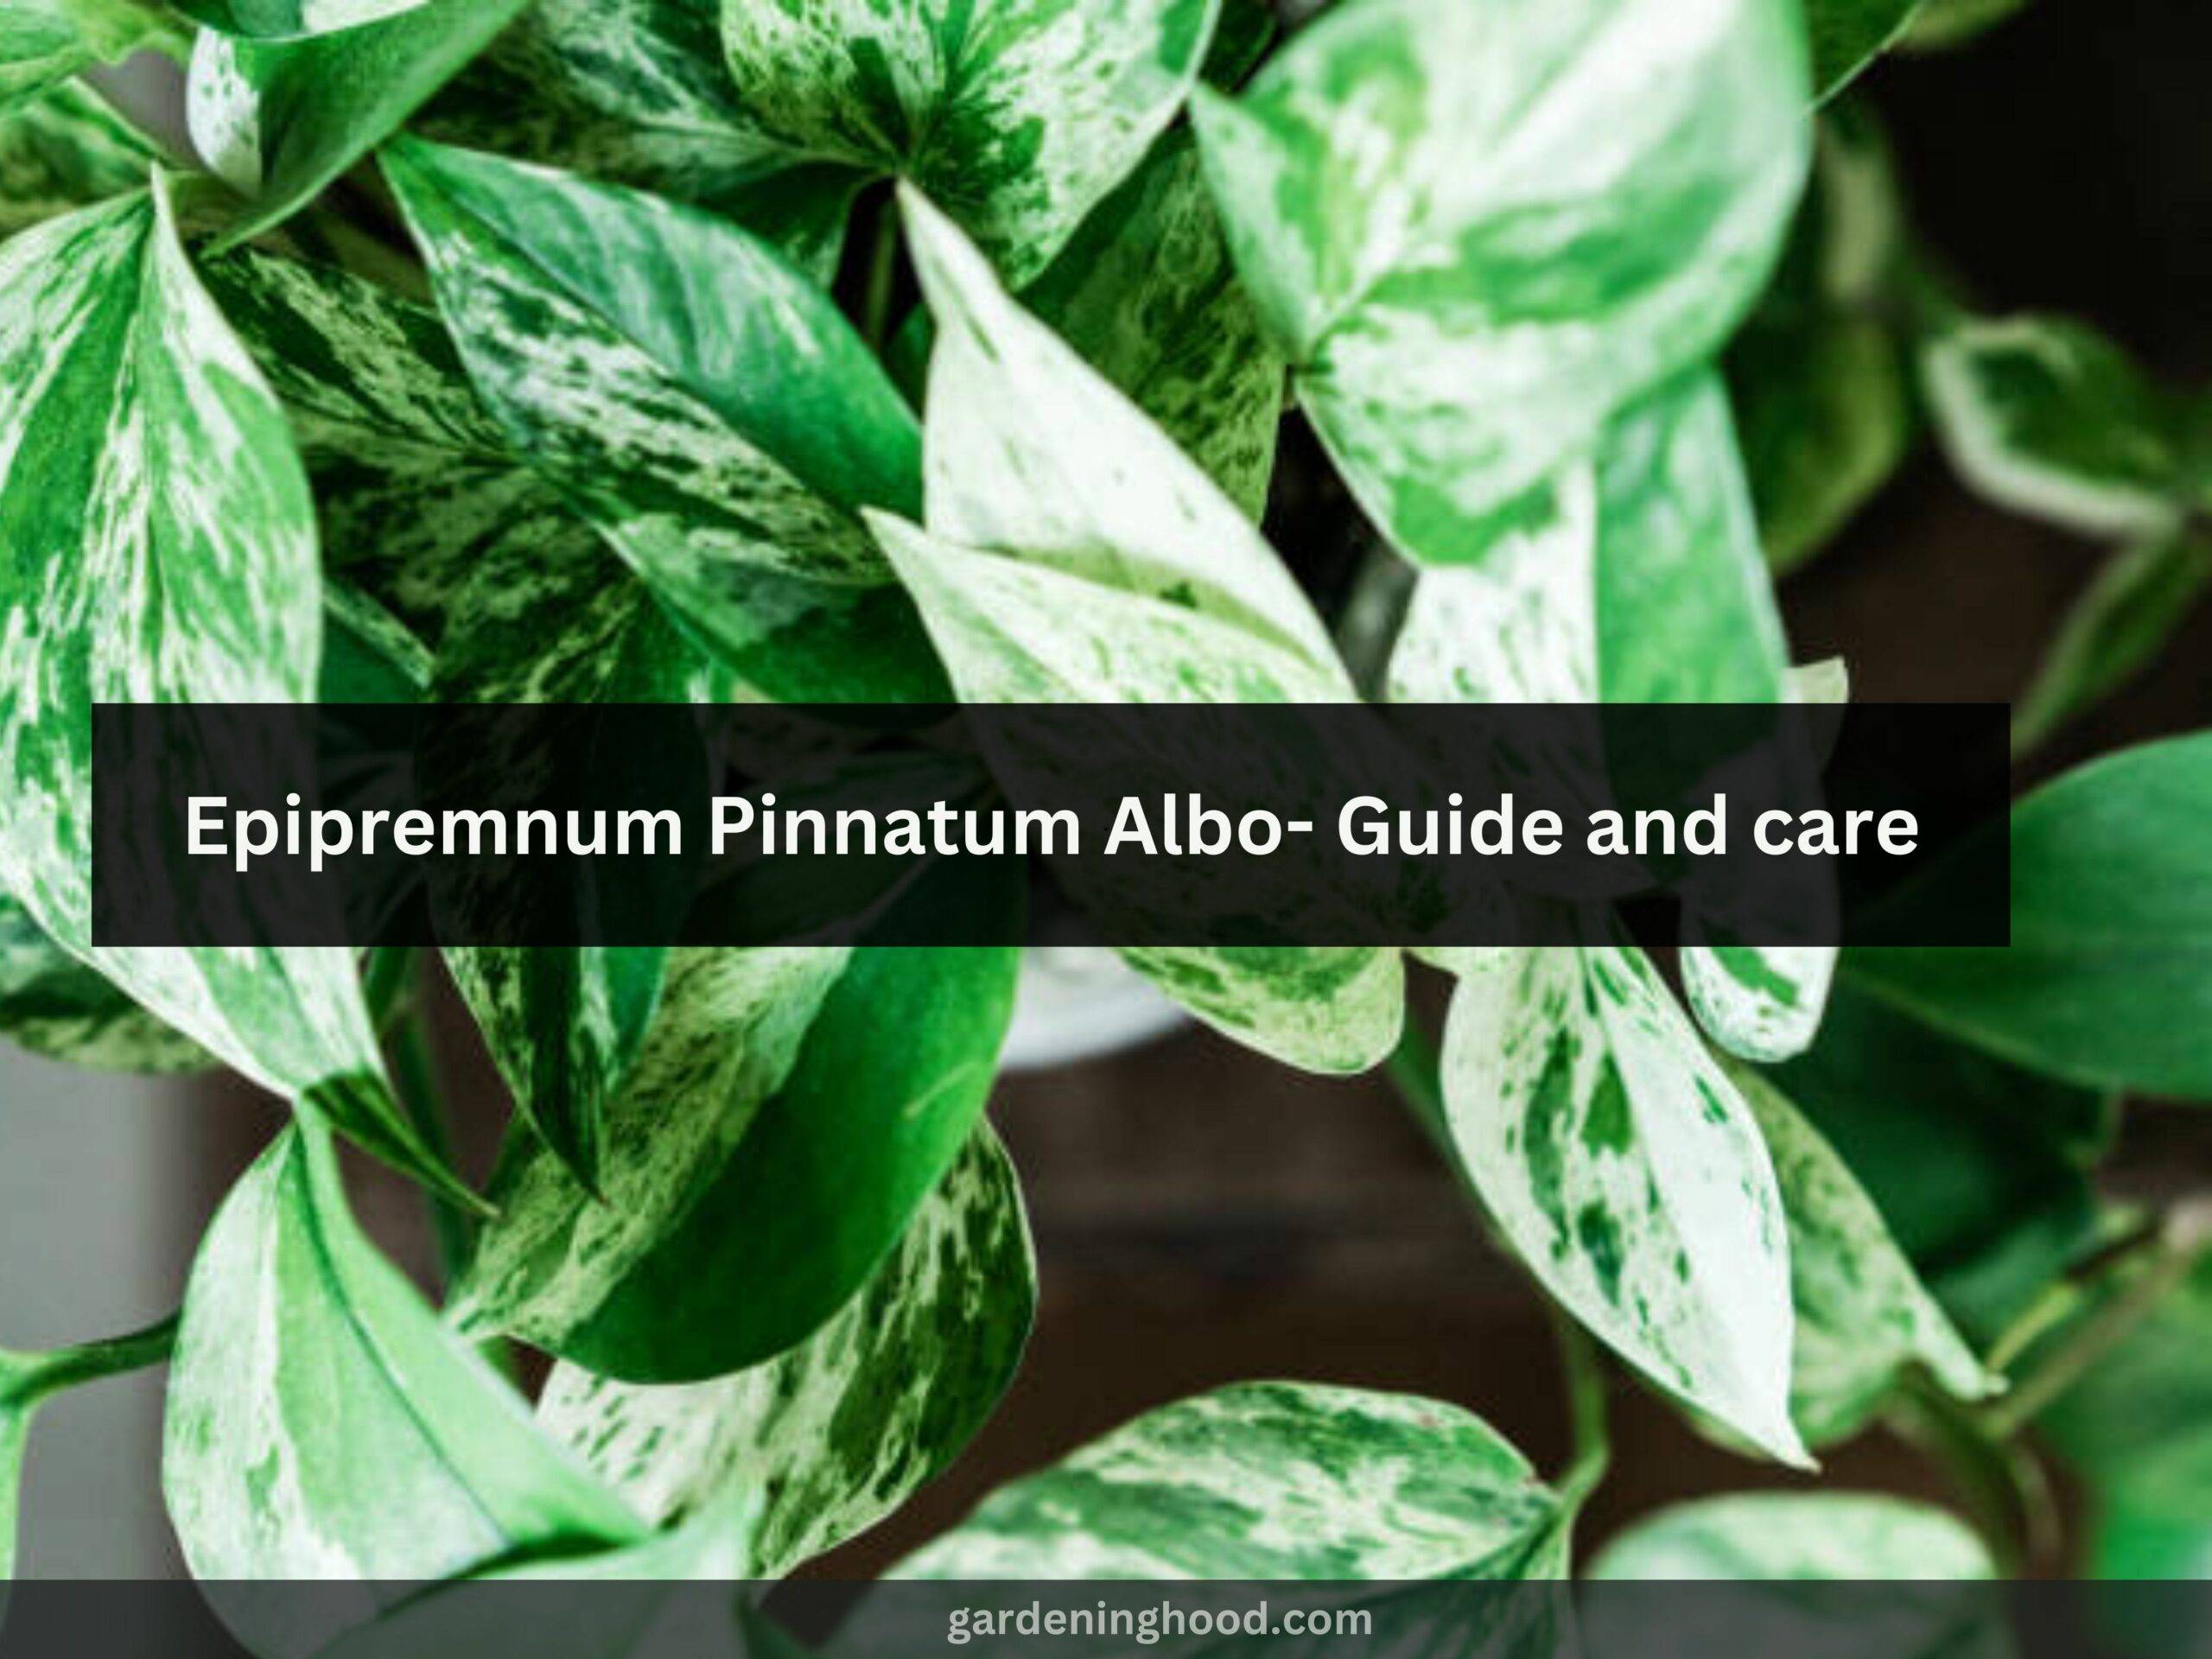 Epipremnum Pinnatum Albo- Guide and care